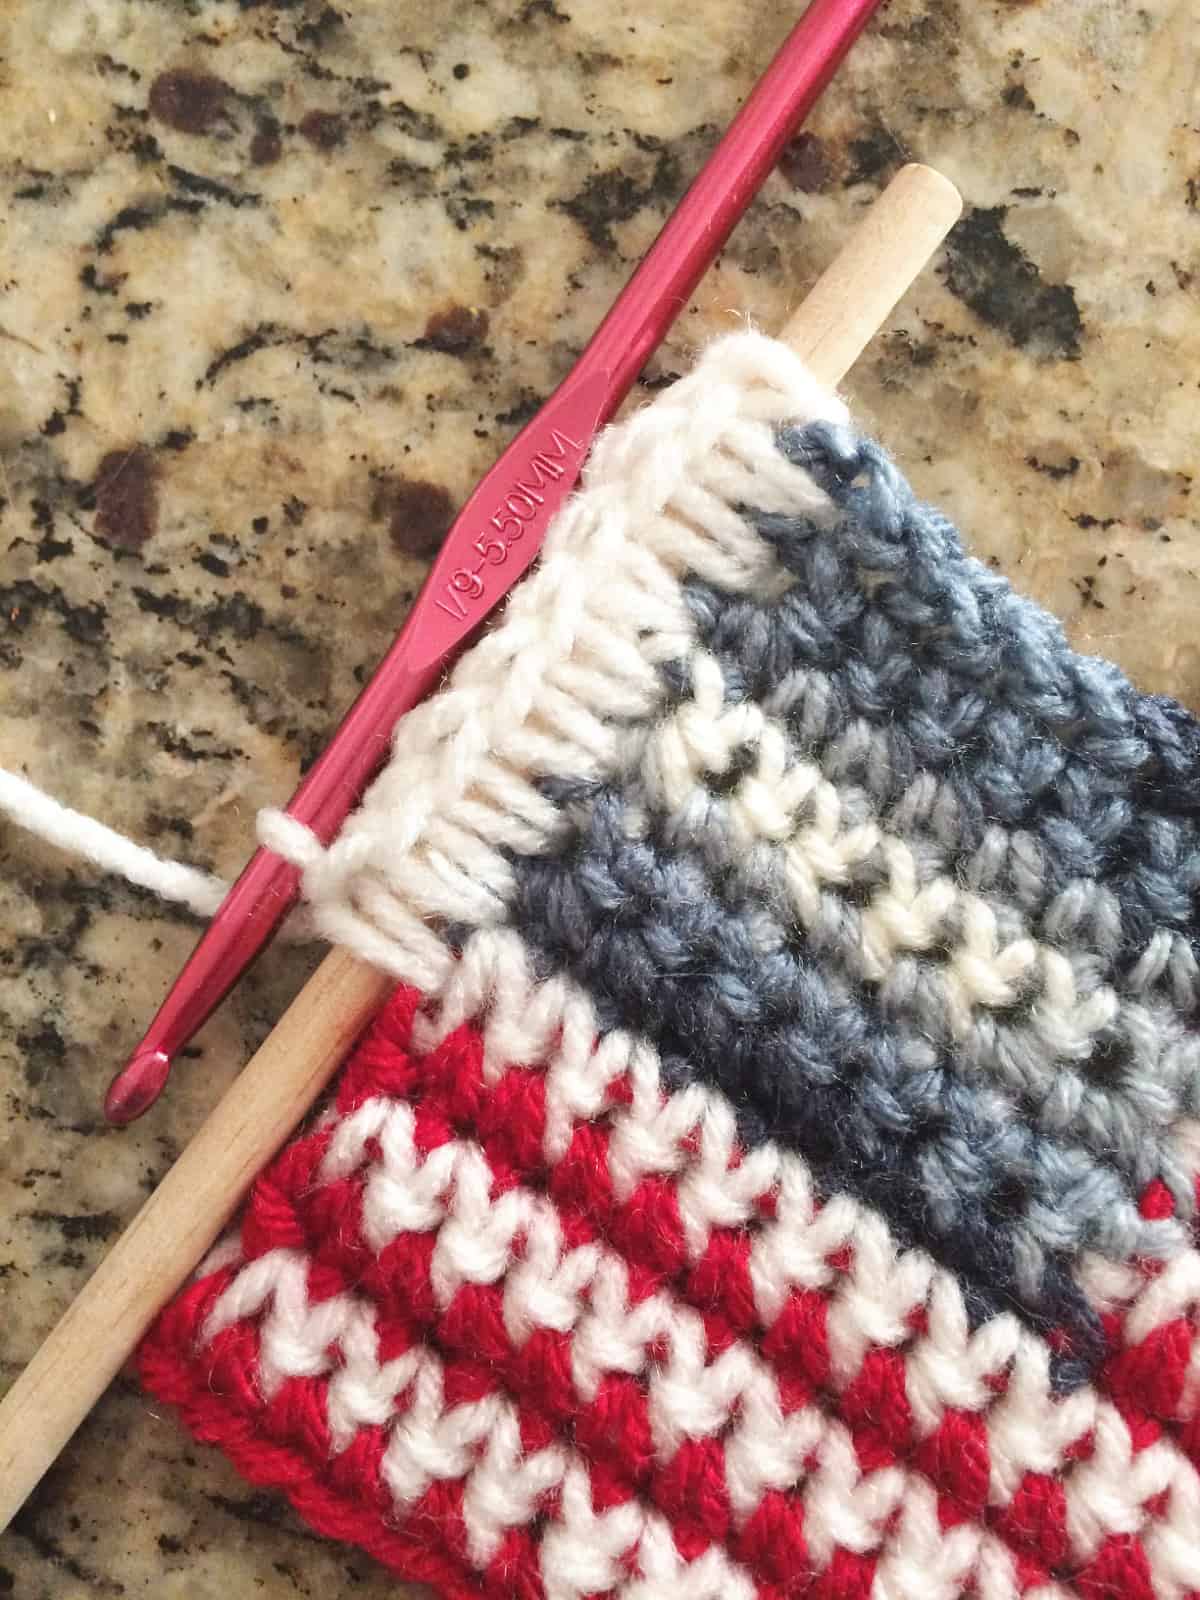 Single crochets down dowel to attach crochet flag.